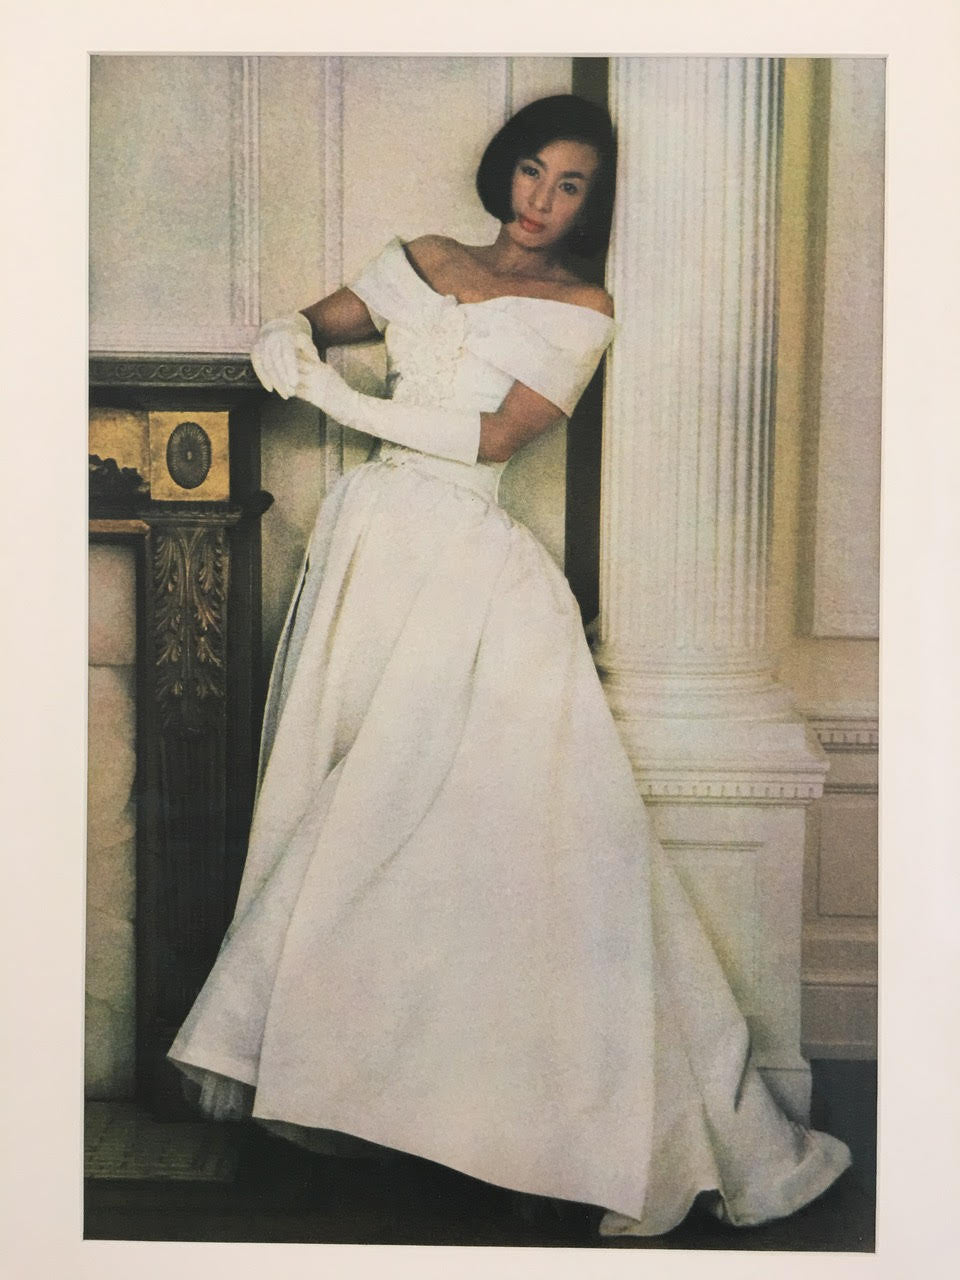 Vera Wang 'Classic Audrey Hepburn Bâteau Neckline Gown' size 4 used wedding dress